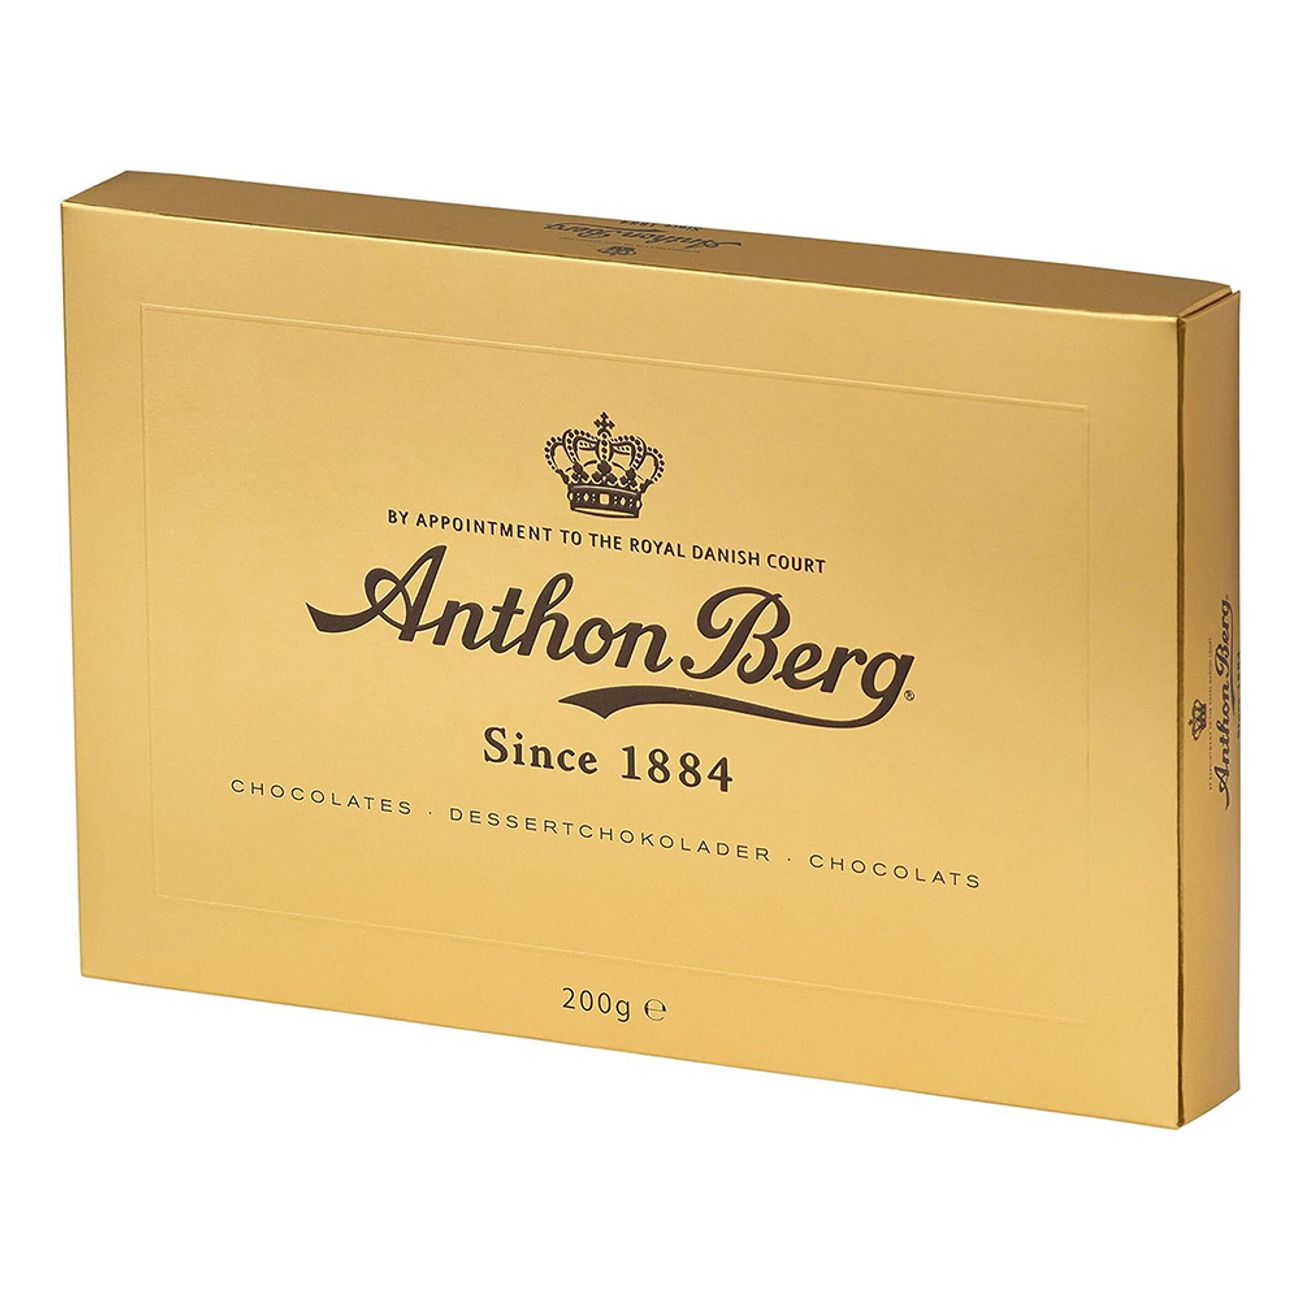 anthon-berg-guld-chokladask-99239-3